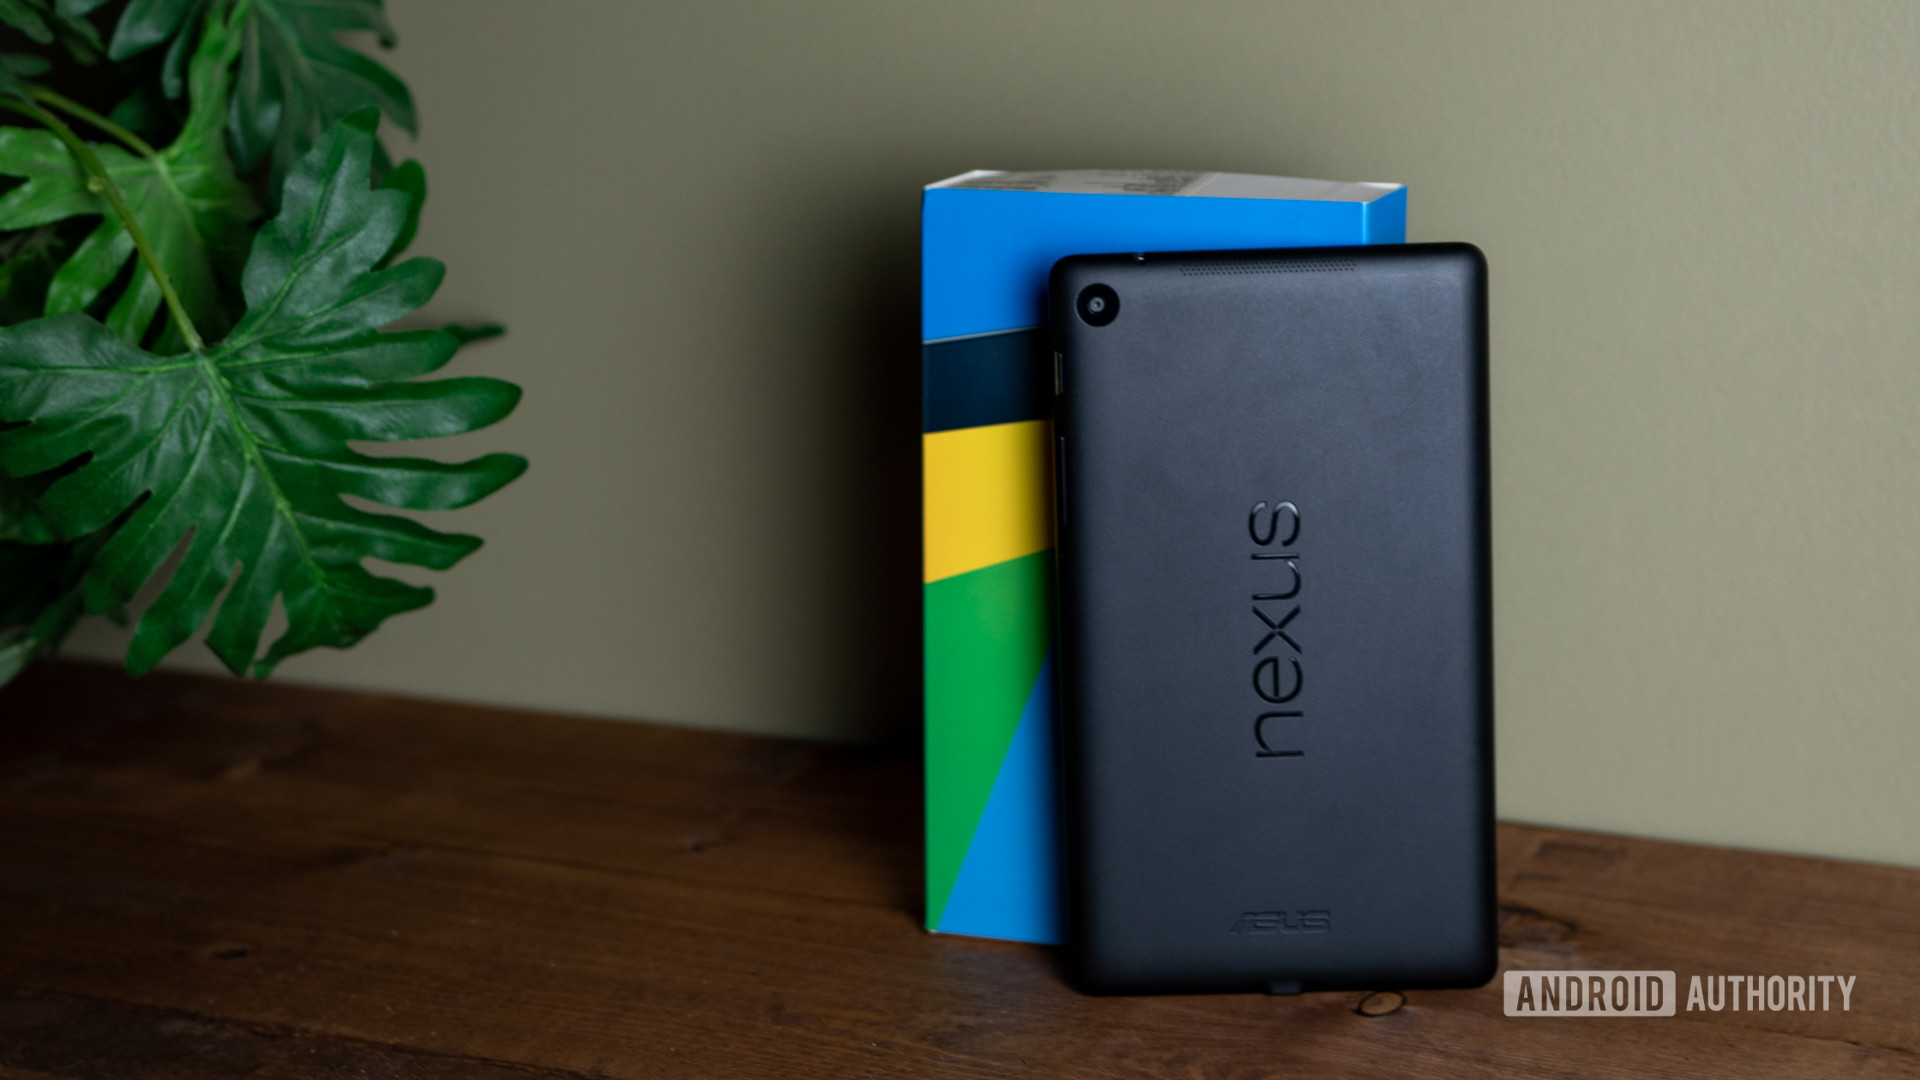 Google Nexus 7 Leaning on Box